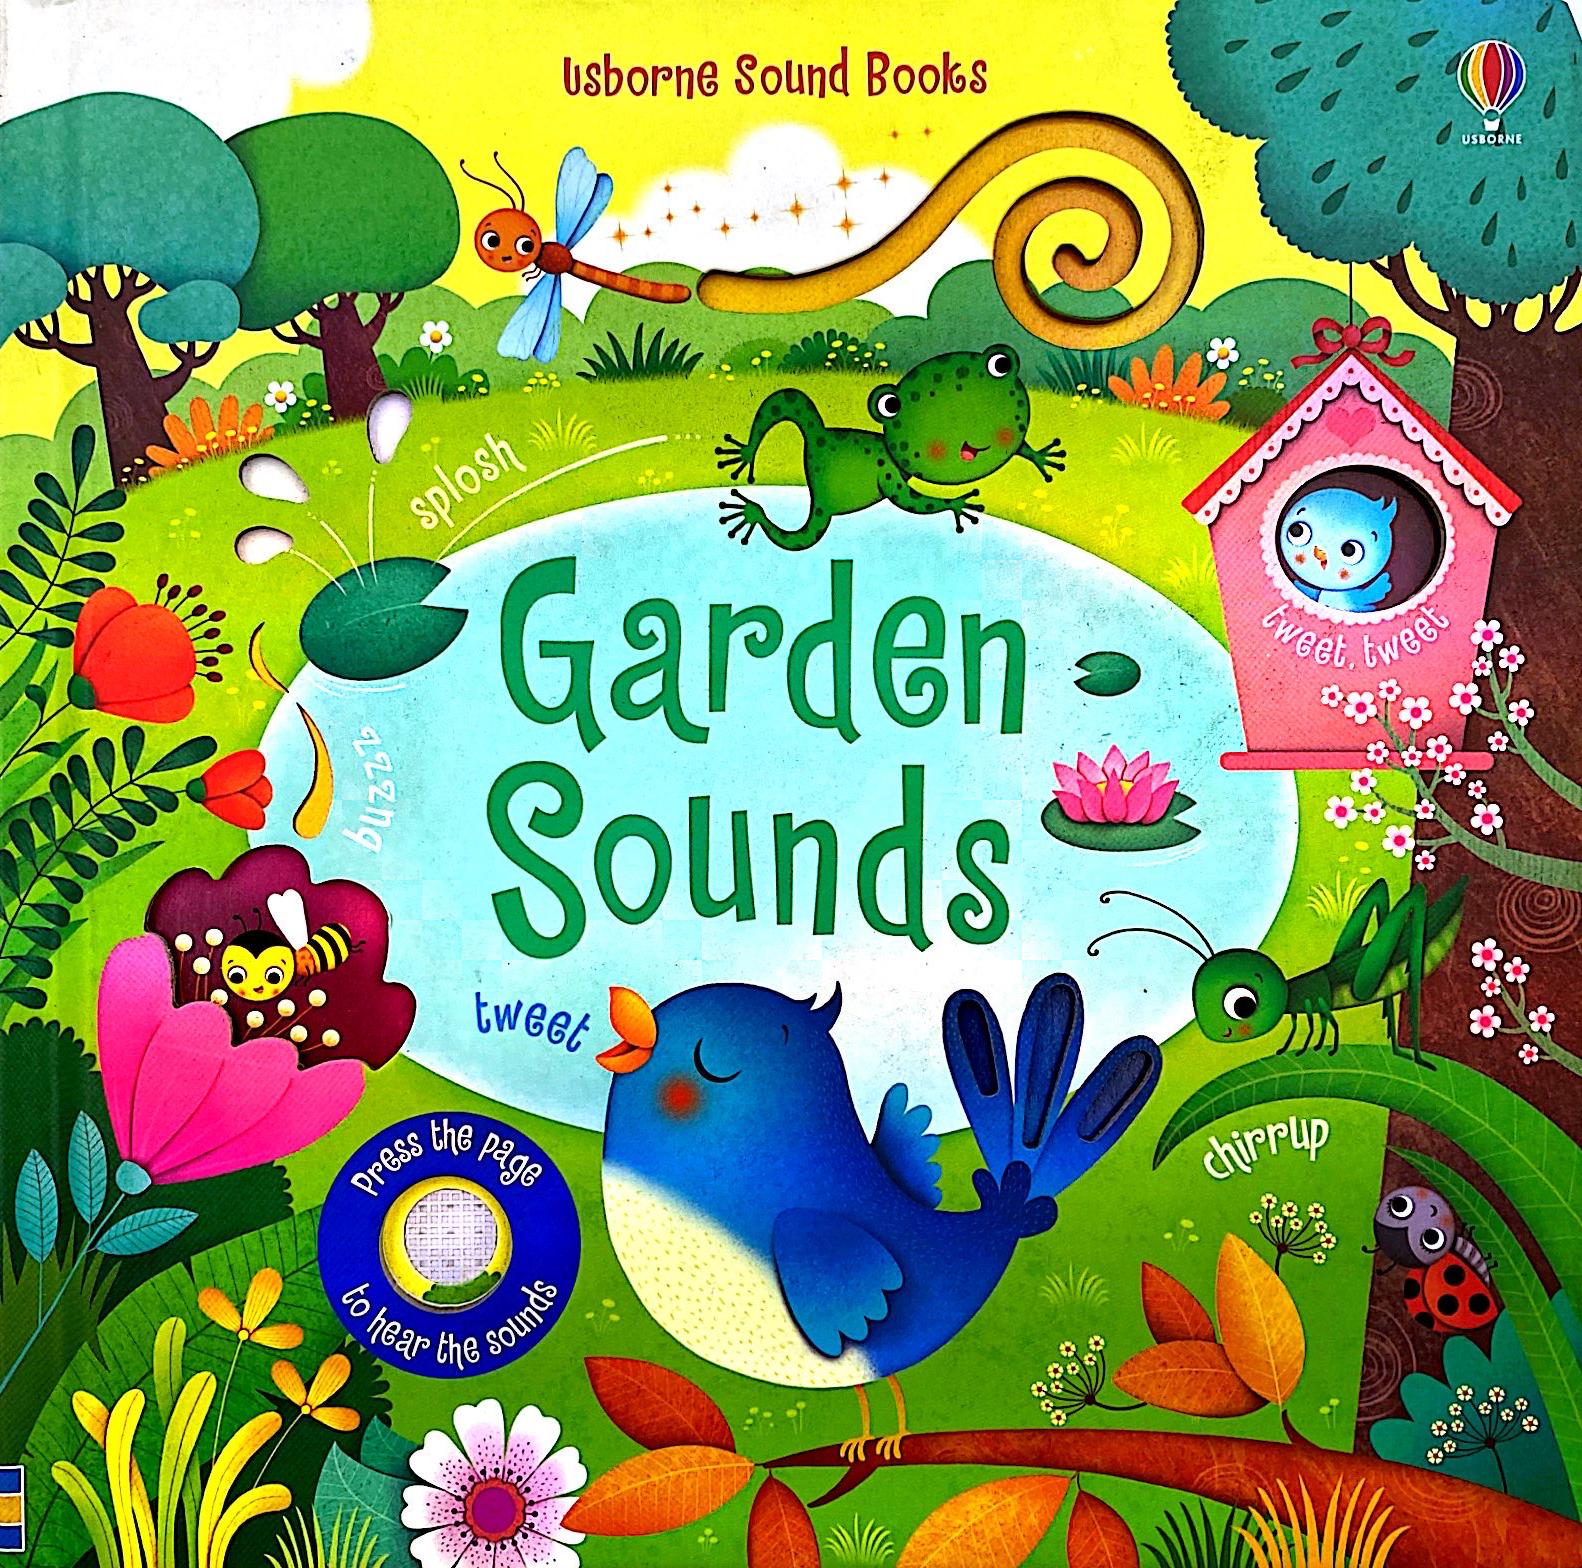 Hình ảnh Usborne Garden Sounds (Touchy-feely Sound Books)